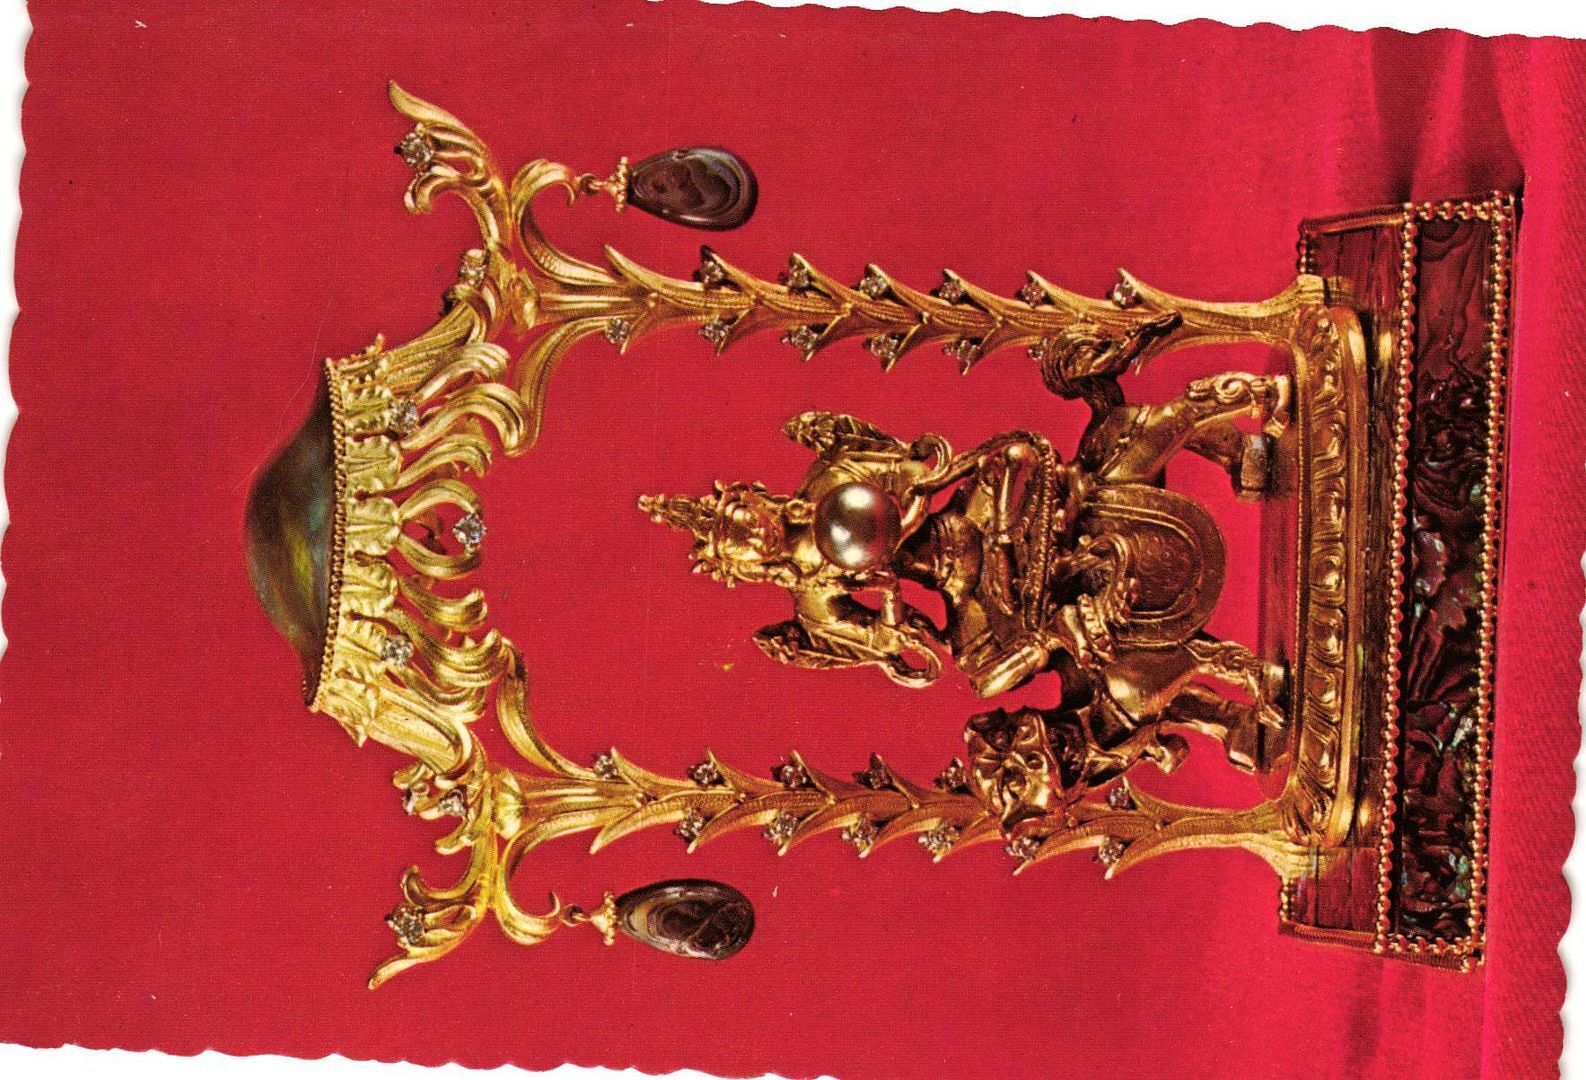 Vintage Postcard 4x6- GOLD PAGODA FROM NEPAL, HEADLEY JEWEL MUSEUM, LEX 1960-80s